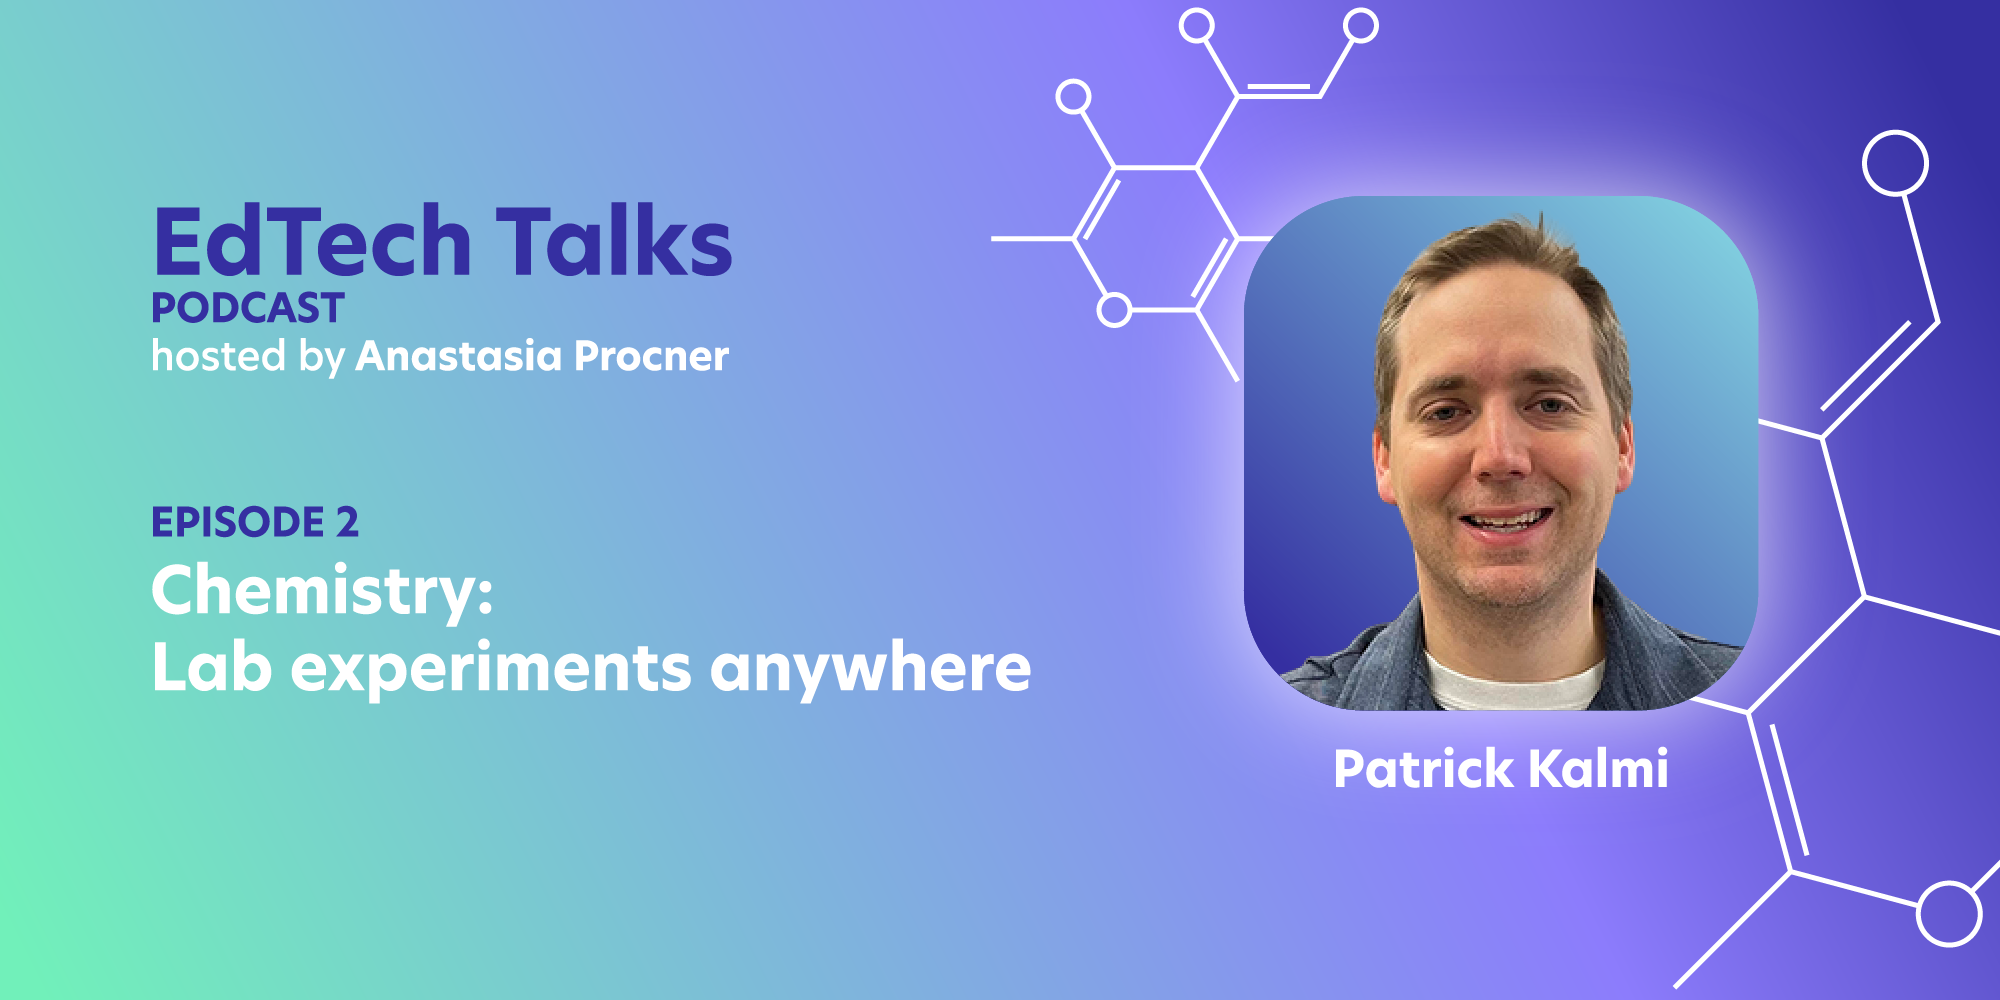 Patrick Kalmi edtech talks